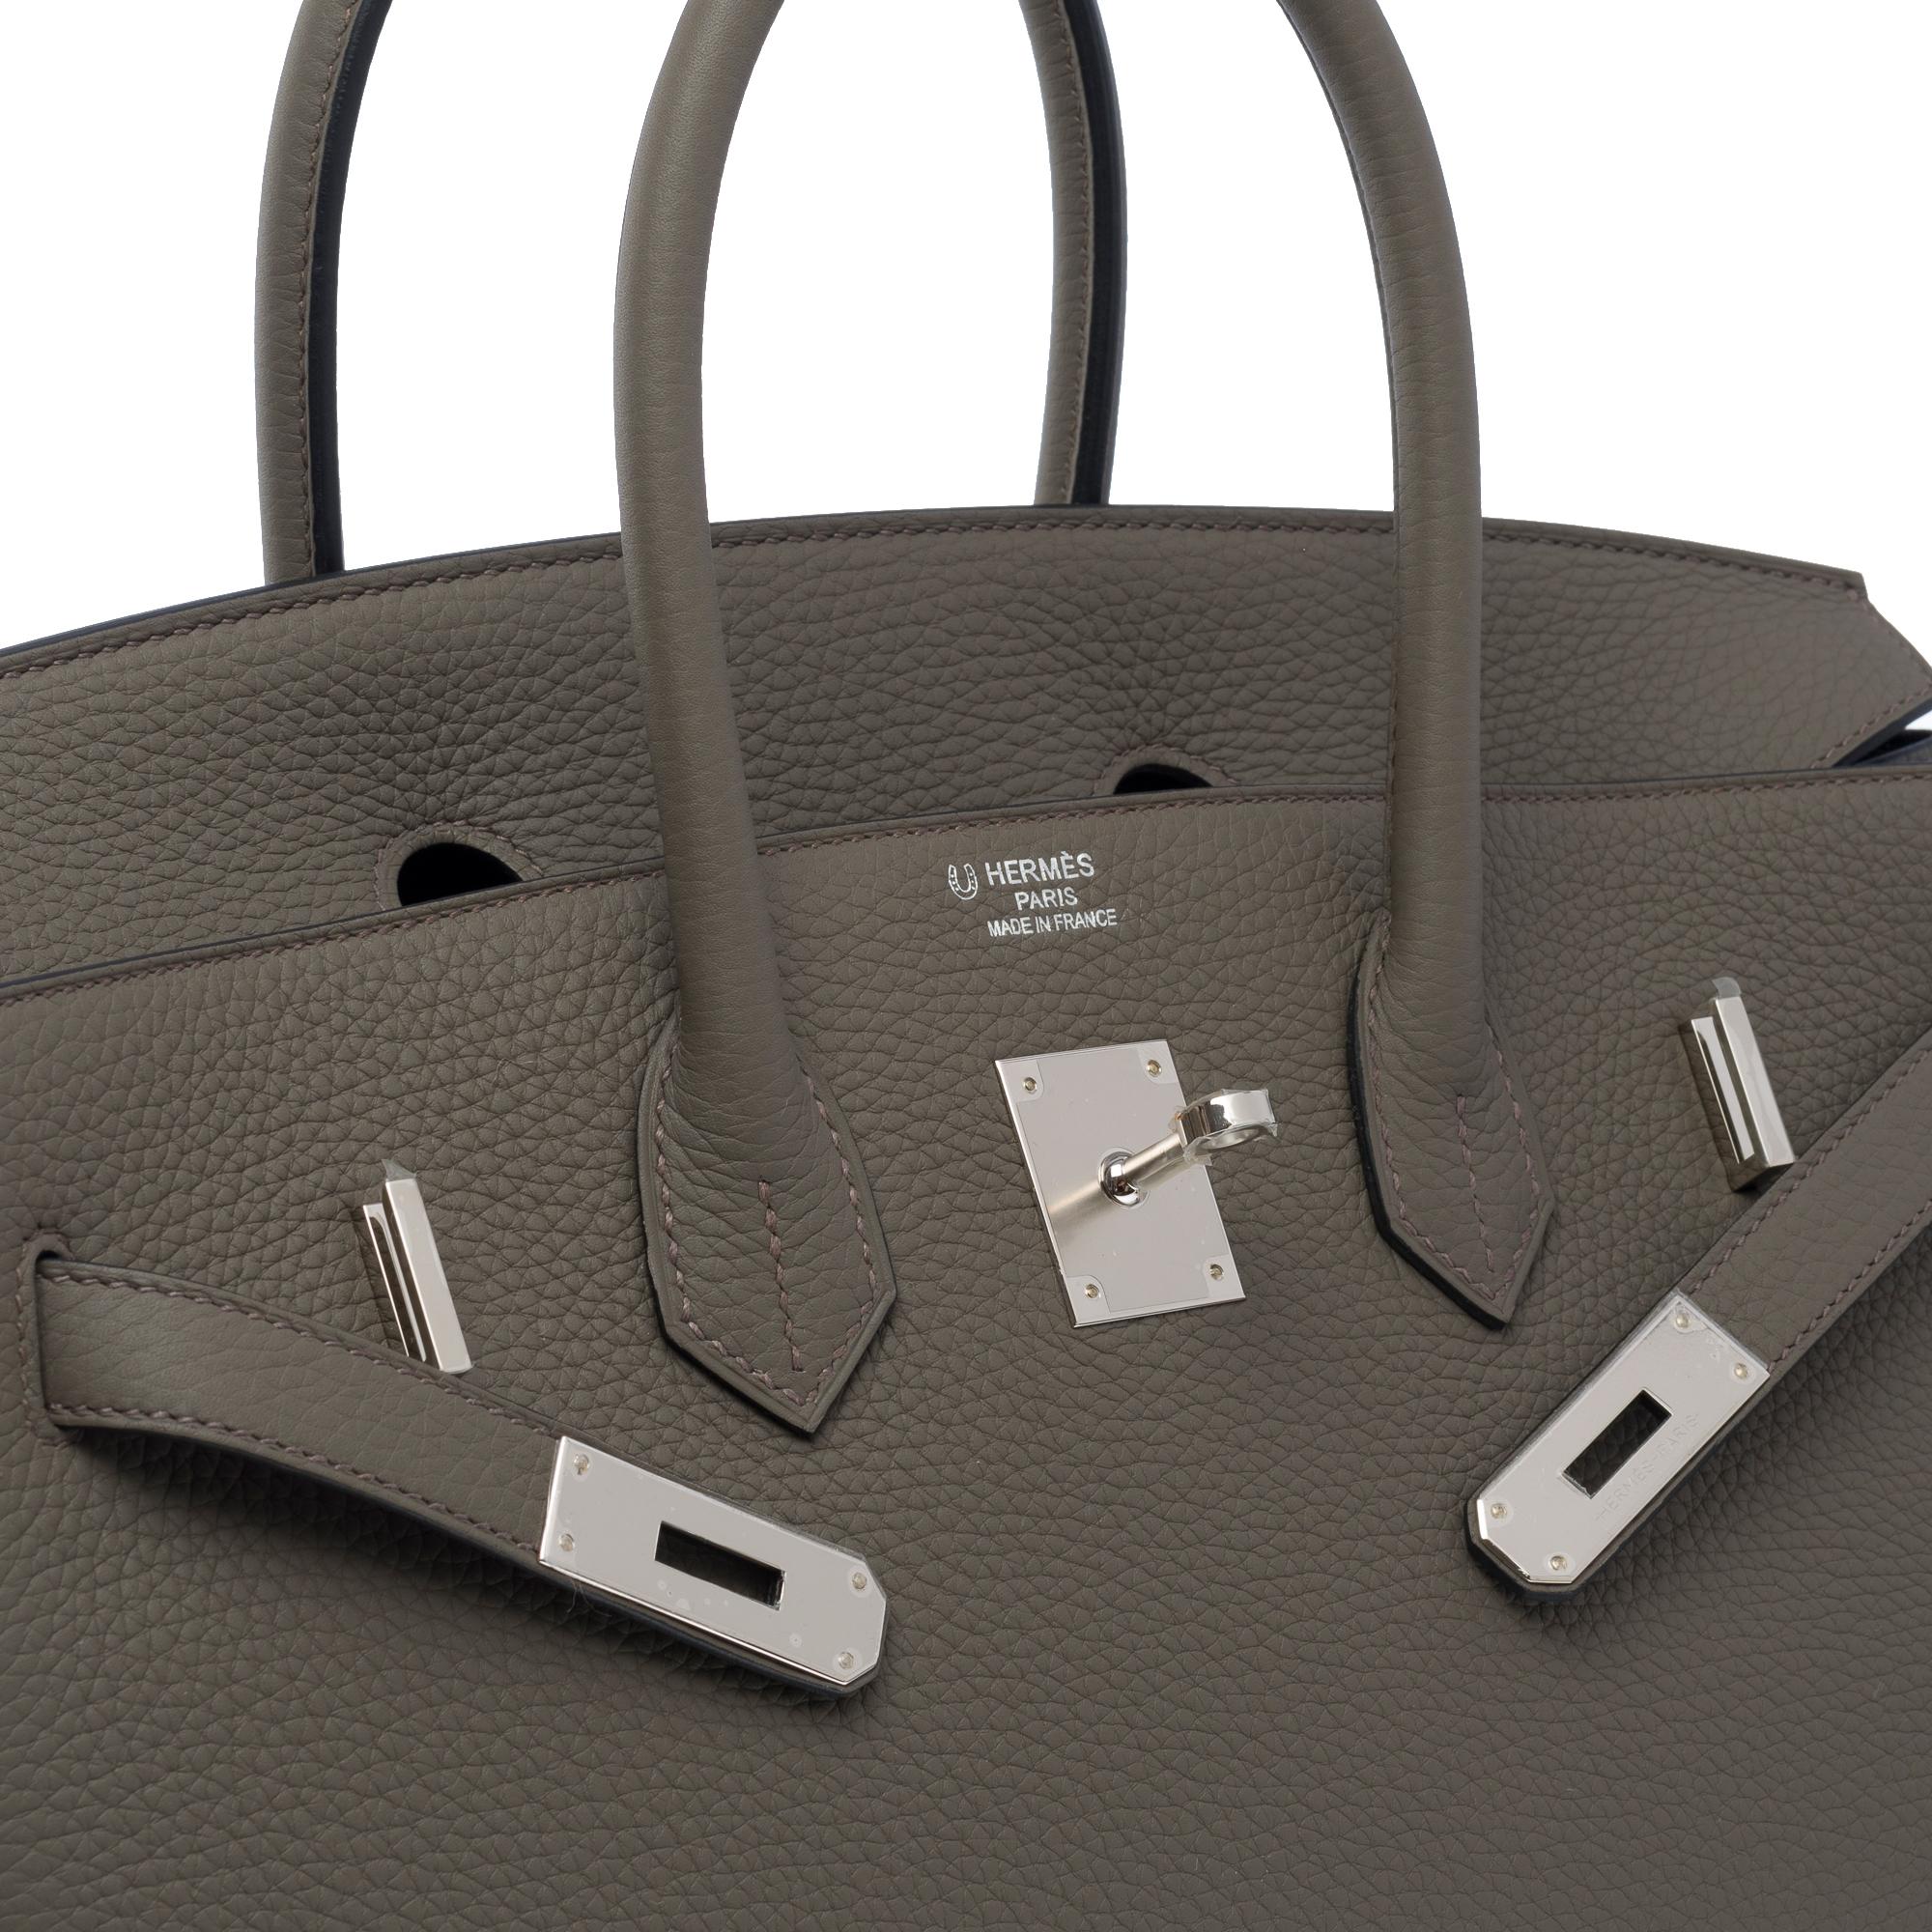 Rare Hermès Birkin 35 HSS (Special Order) handbag in Etain Togo leather, SHW 3